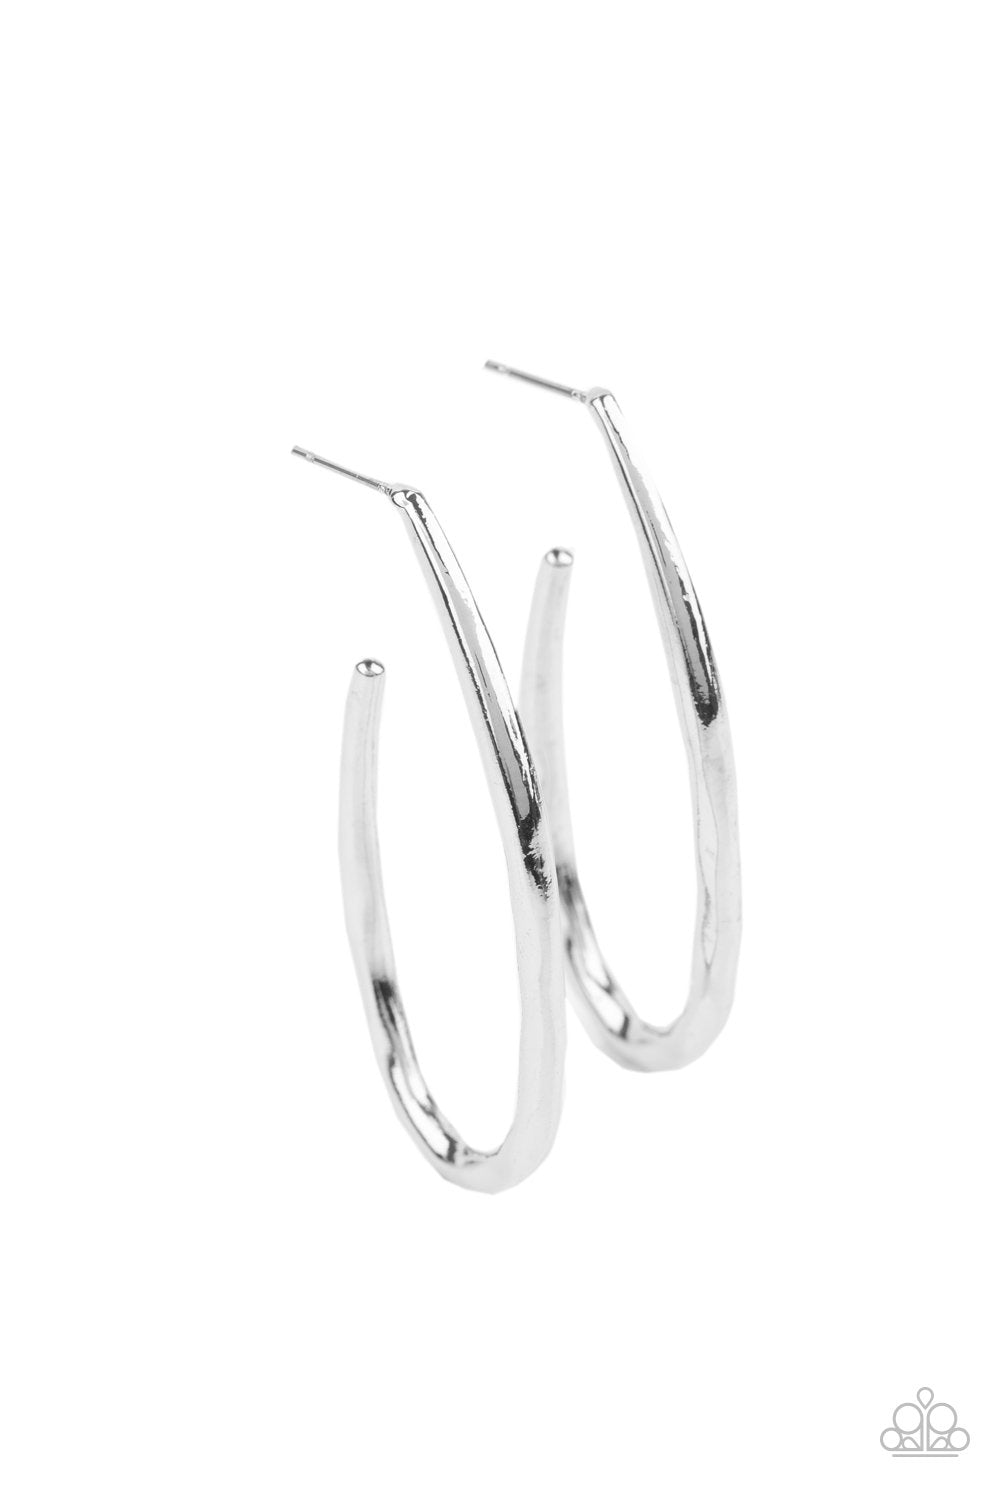 Totally Hooked - Silver Earring freeshipping - JewLz4u Gemstone Gallery